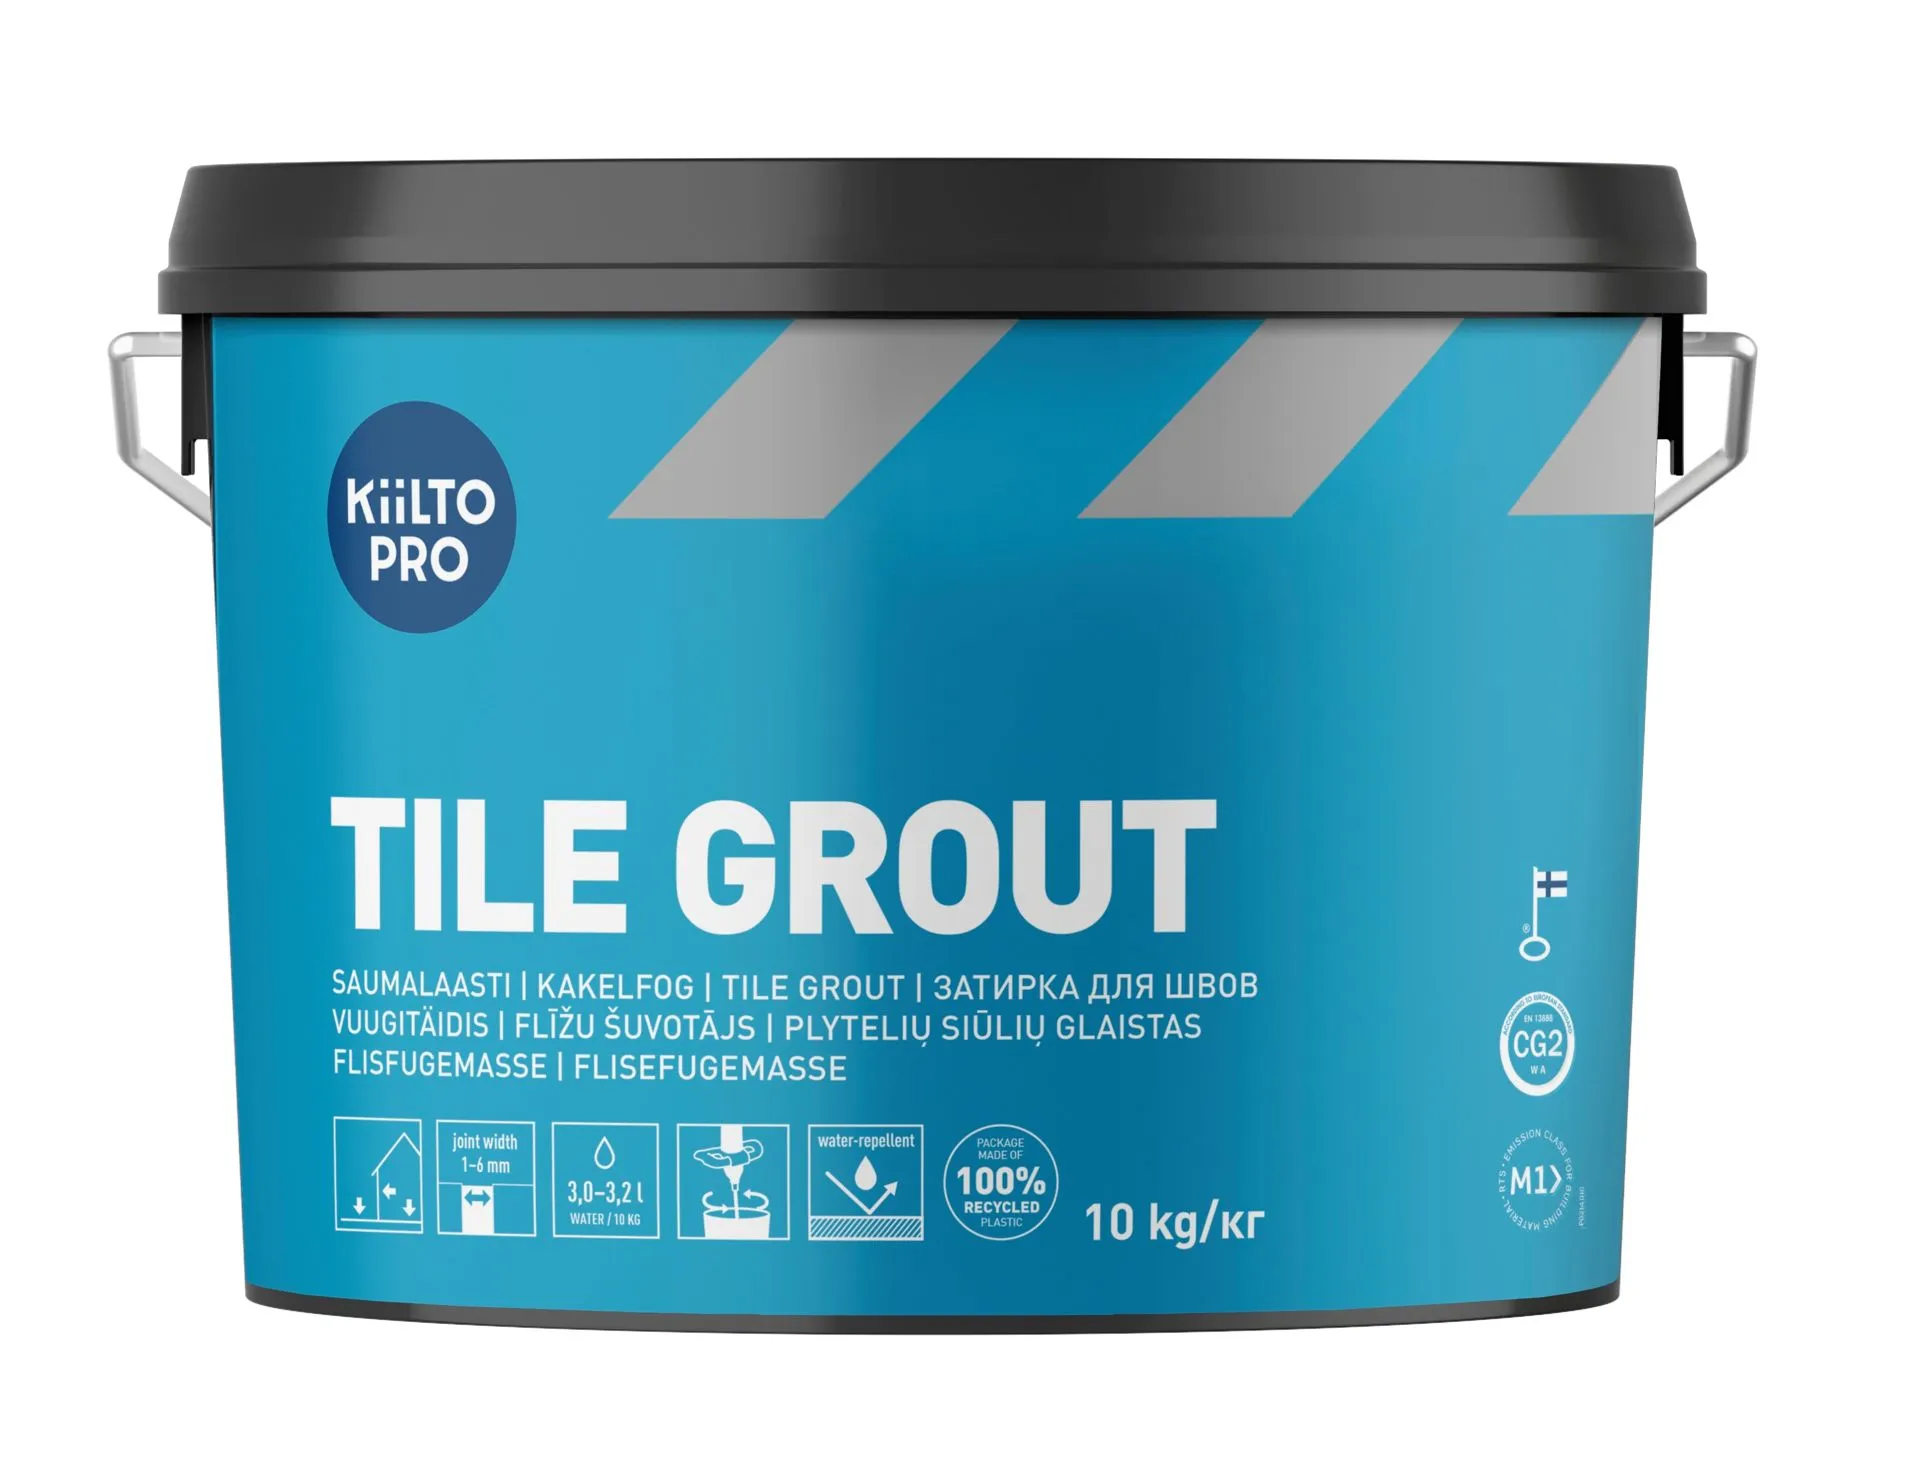 Kiilto Pro Tile grout saumalaasti 41 stone 10 kg